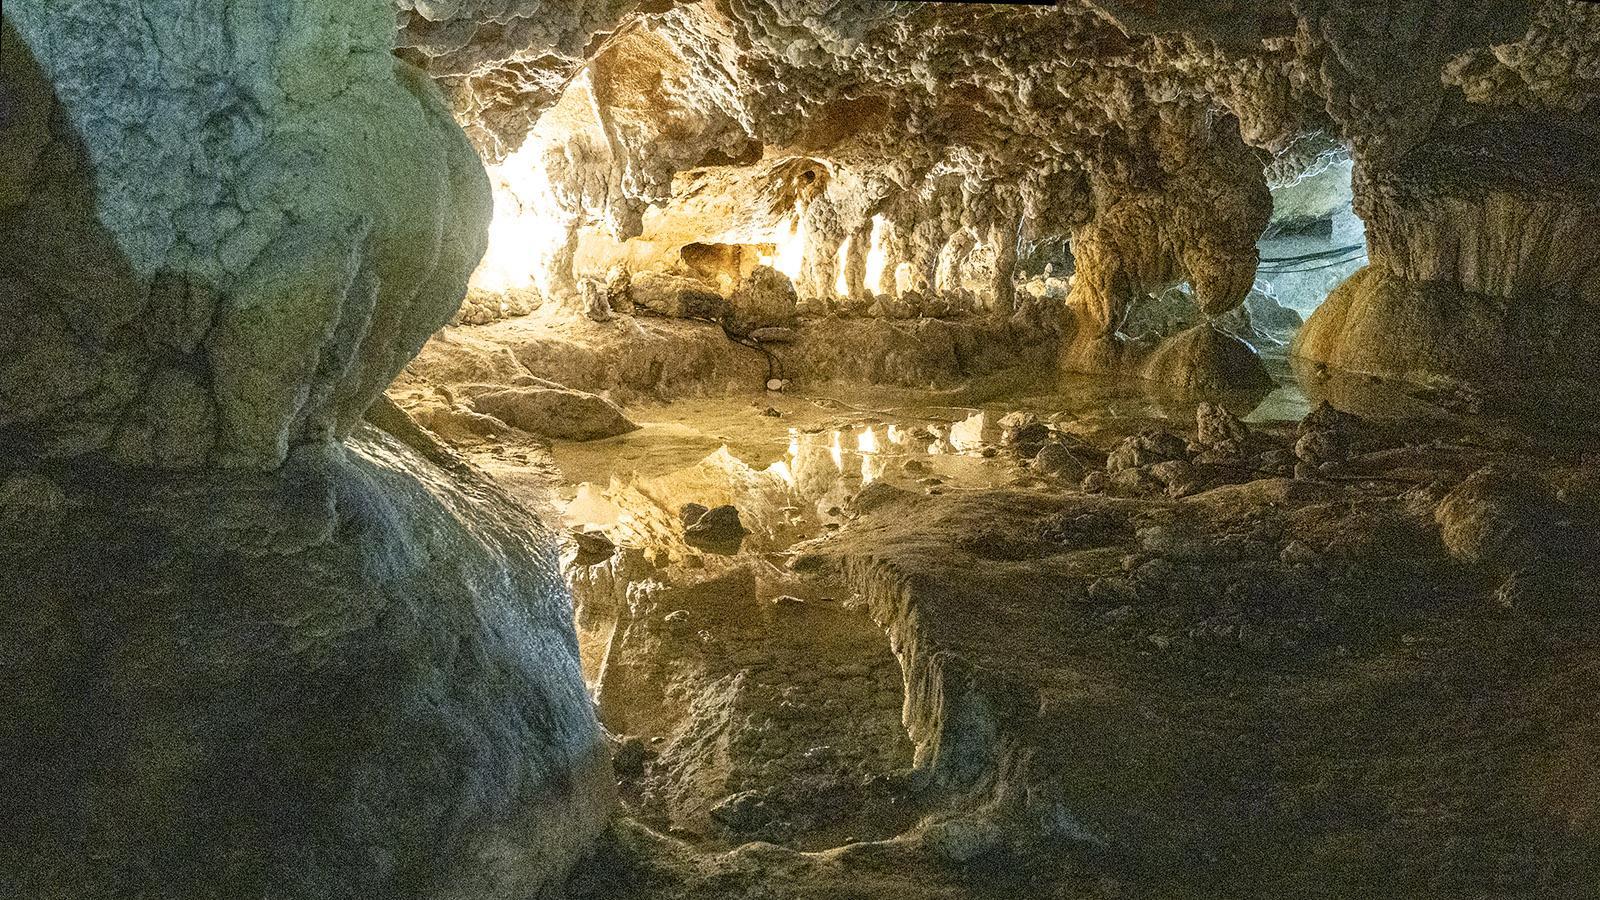 Wunderwelt im Berg: die Grotte von Lombrives. Foto: Hilke Maunder